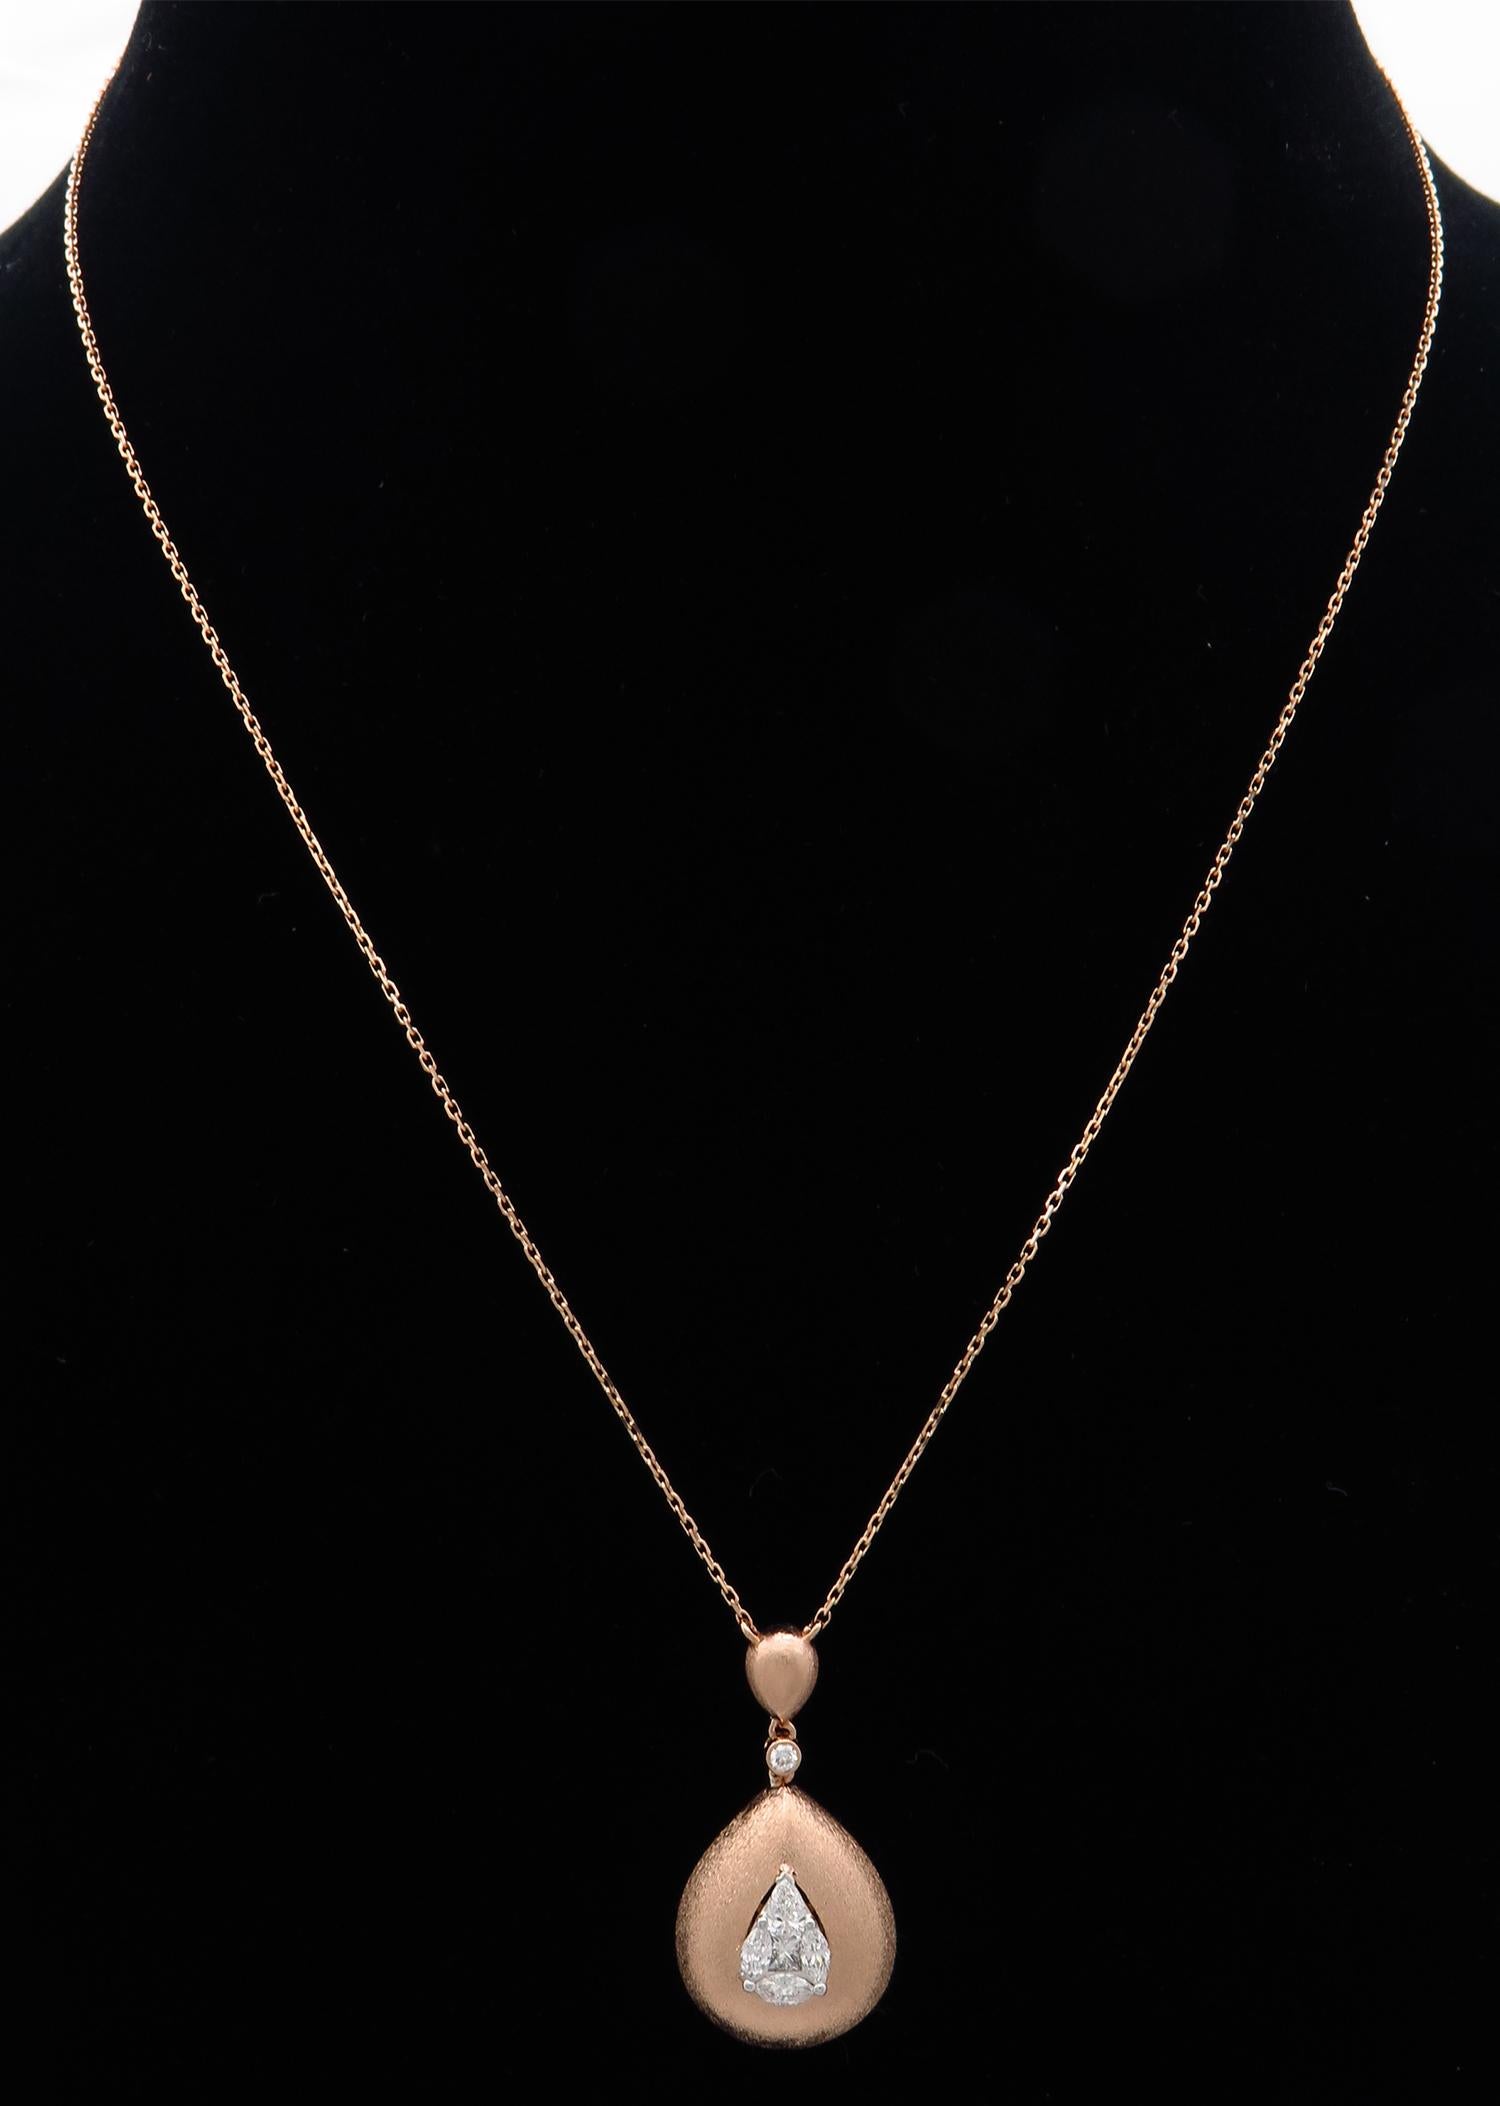 Marquise Cut Illusion Pear Diamond Pendant Necklace 18 Karat Rose Gold For Sale